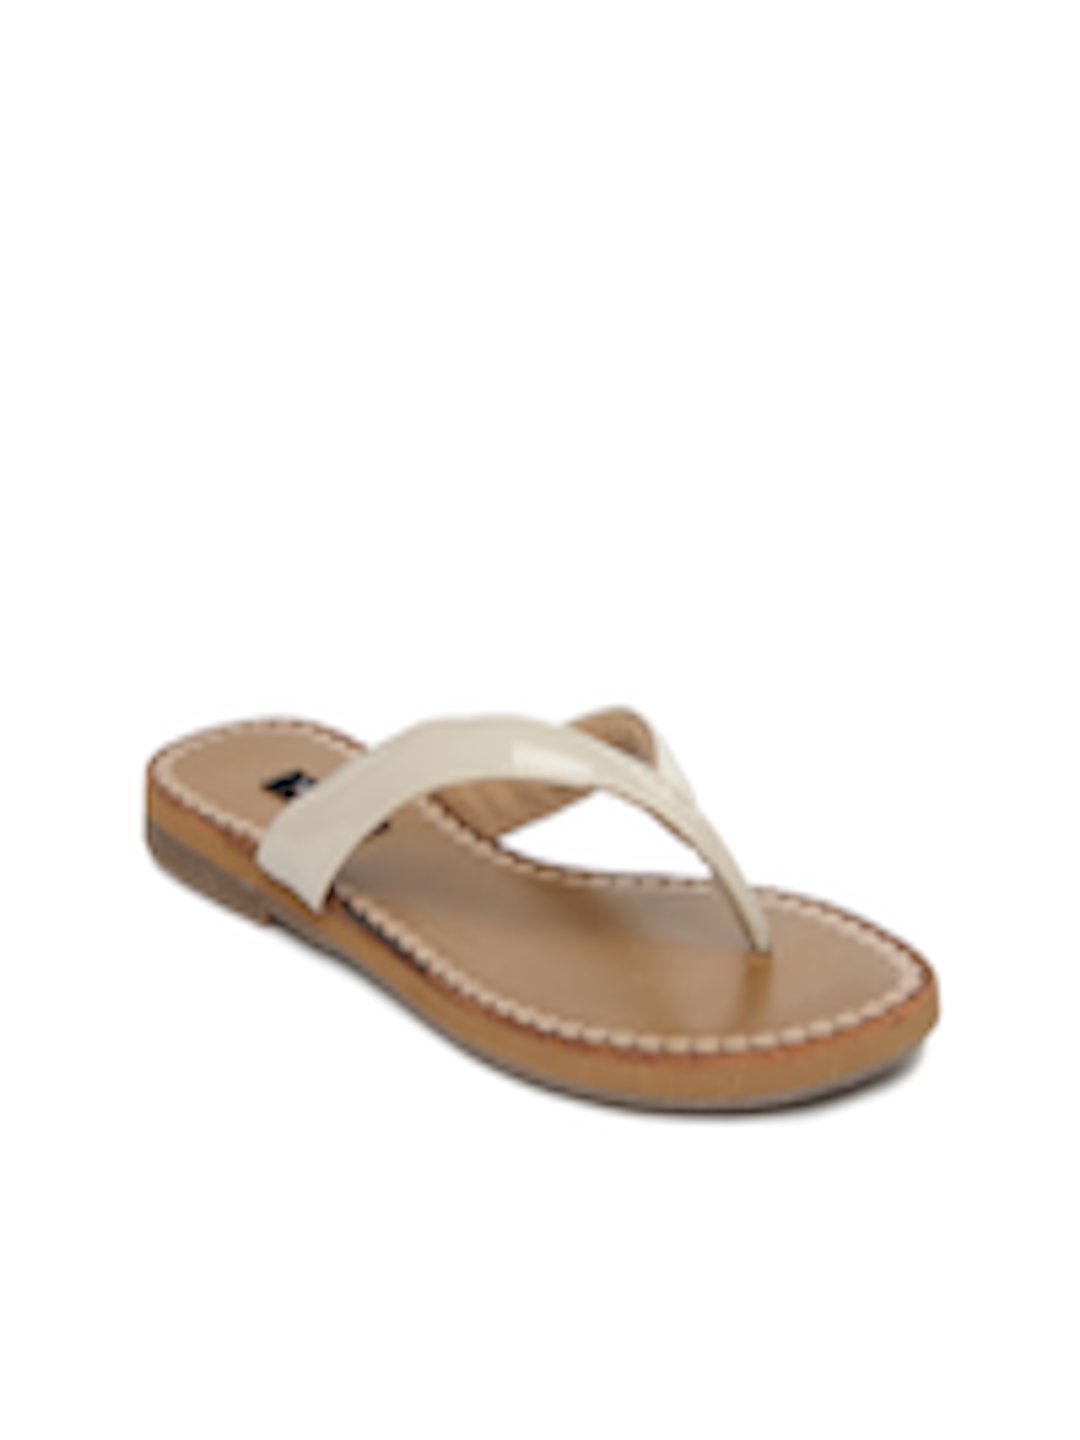 Buy Inc 5 Women Beige Sandals - Flats for Women 324346 | Myntra